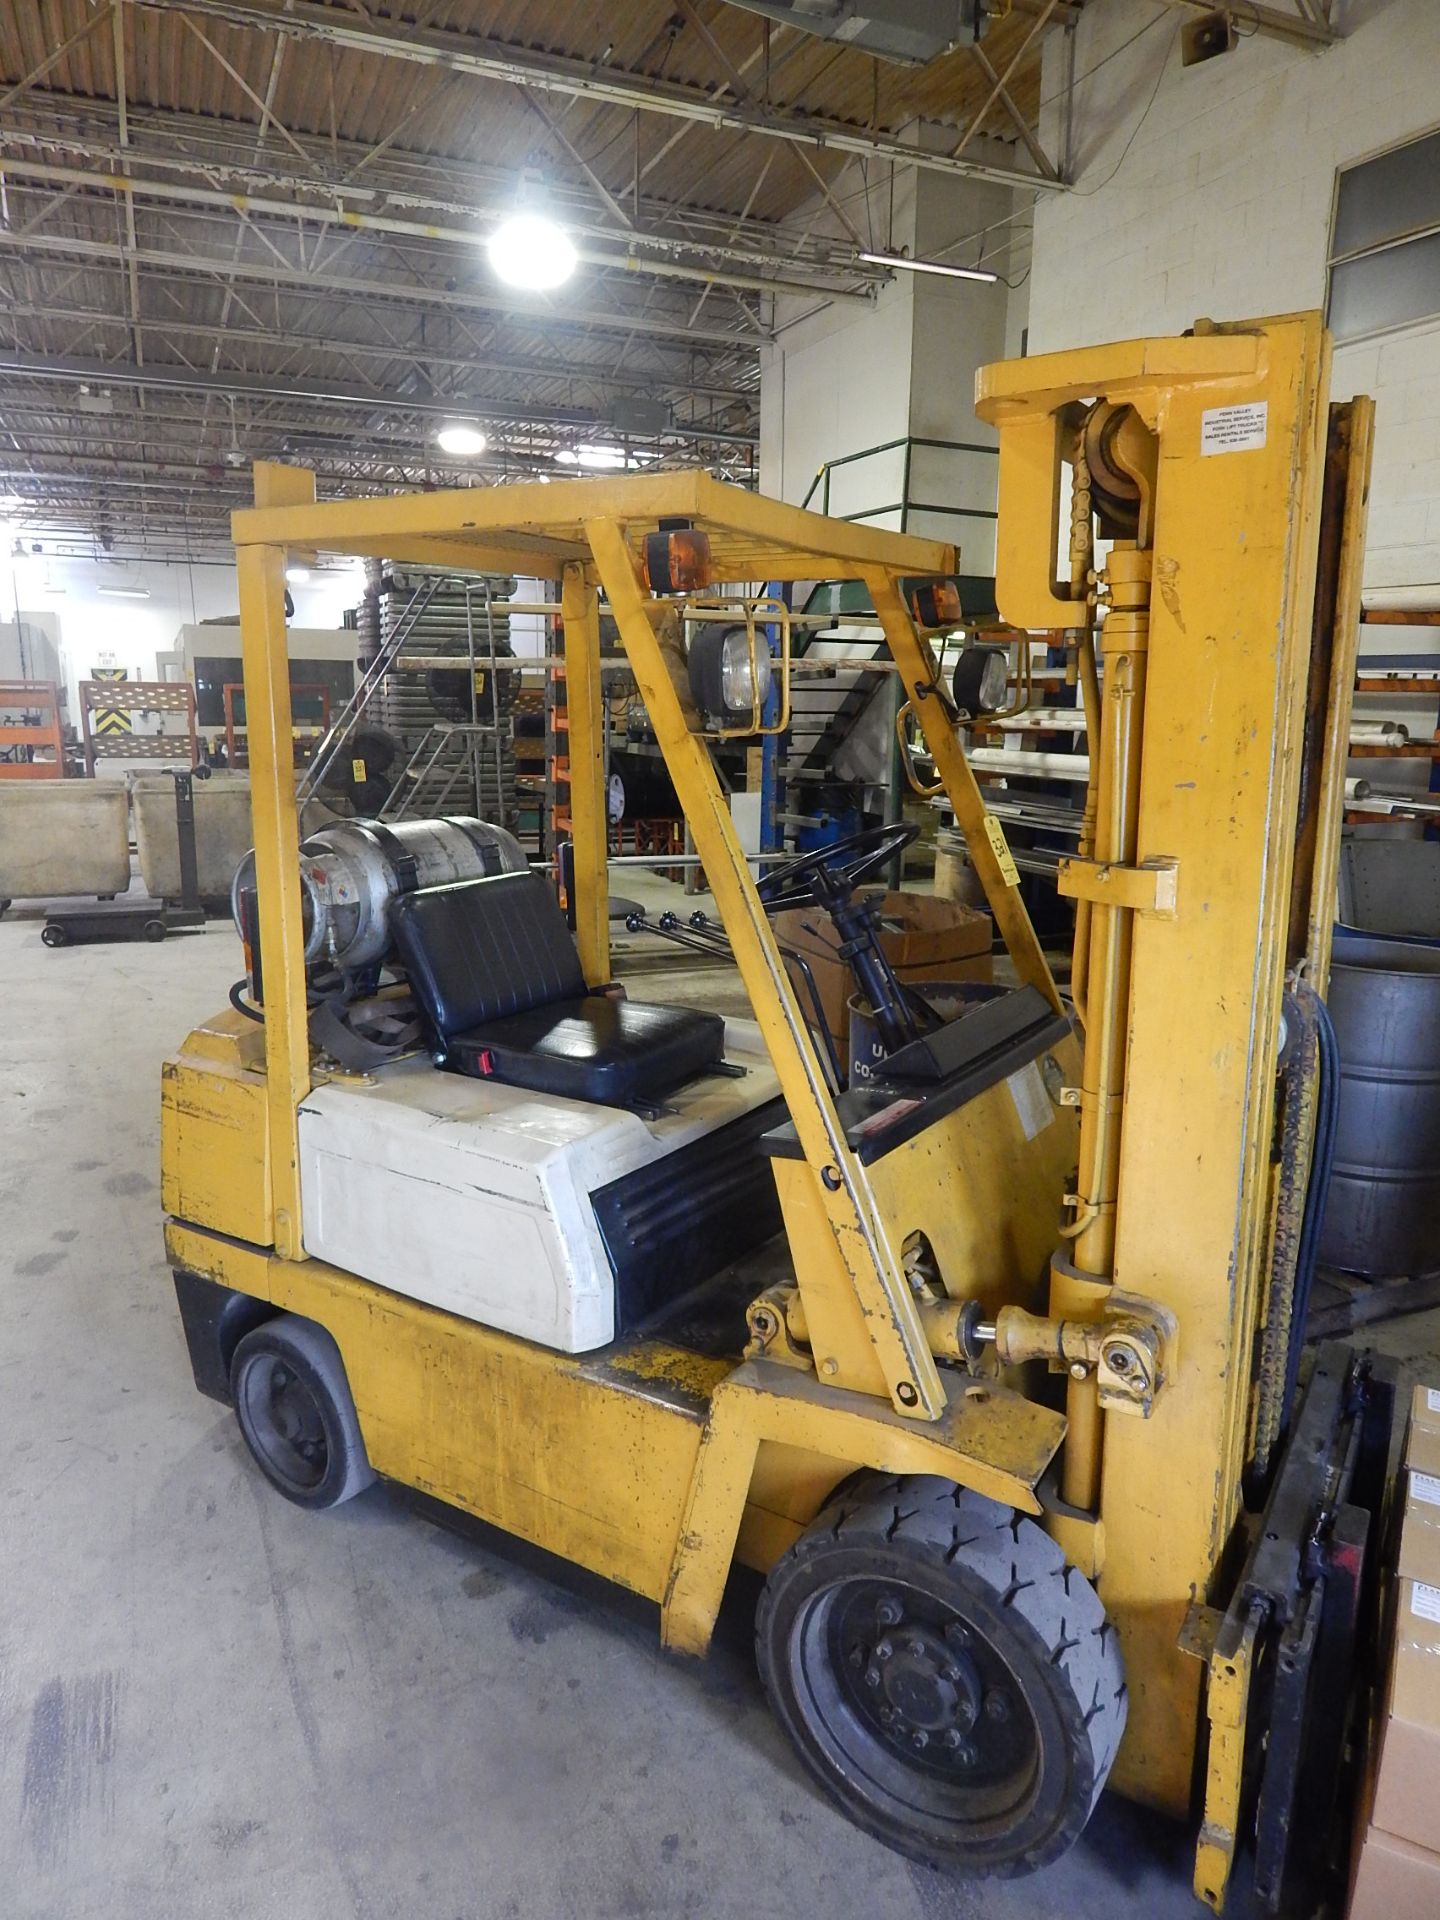 Komatsu Forklift, LP Gas, Hard Tire, Side Shift, 3-Stage Mast, 5,000 lbs (estimated) Cap., Loading - Image 2 of 4